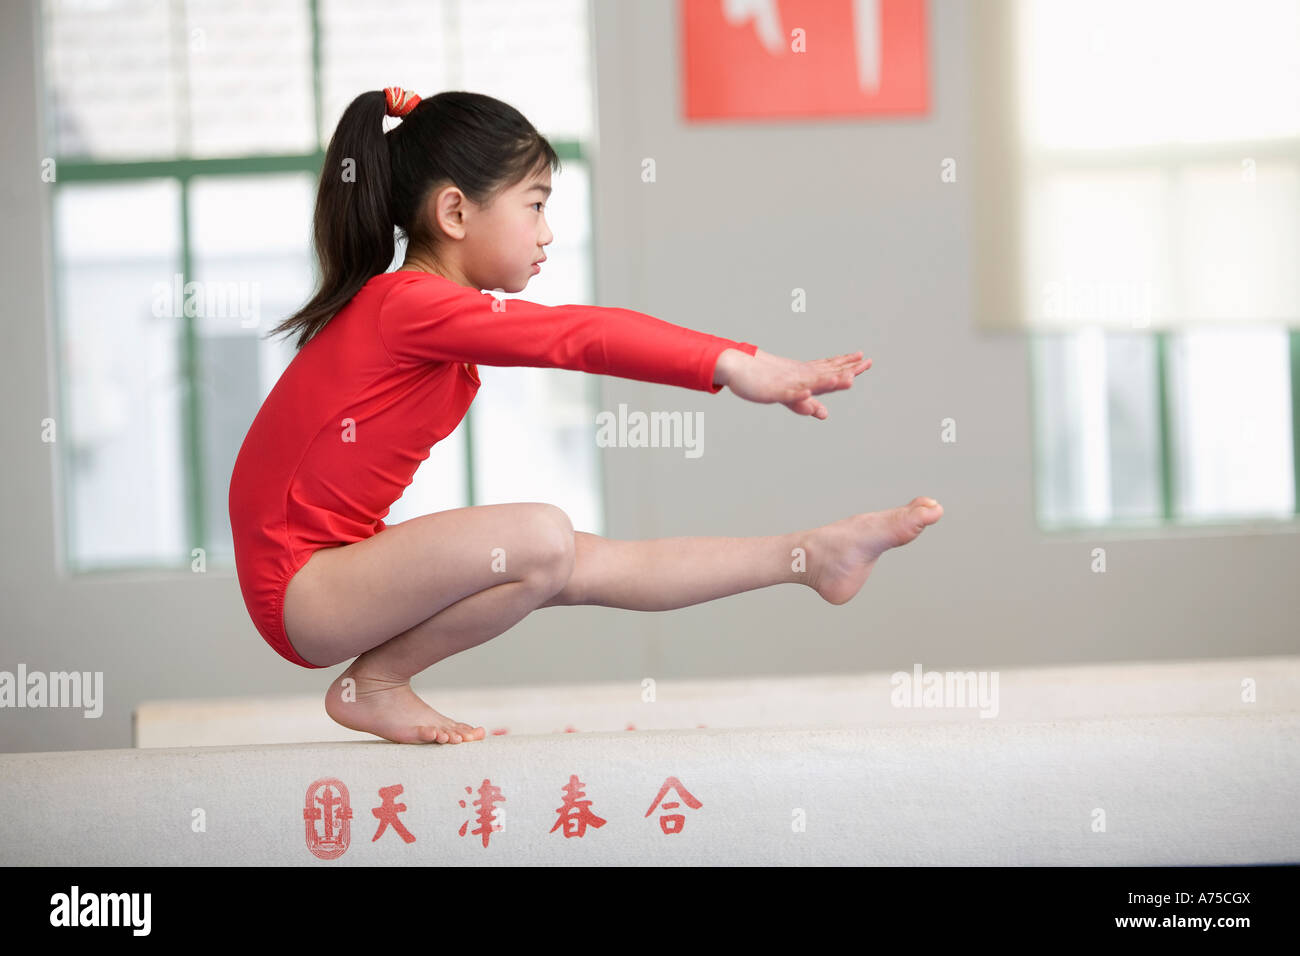 https://c8.alamy.com/comp/A75CGX/young-girl-practicing-gymnastics-A75CGX.jpg